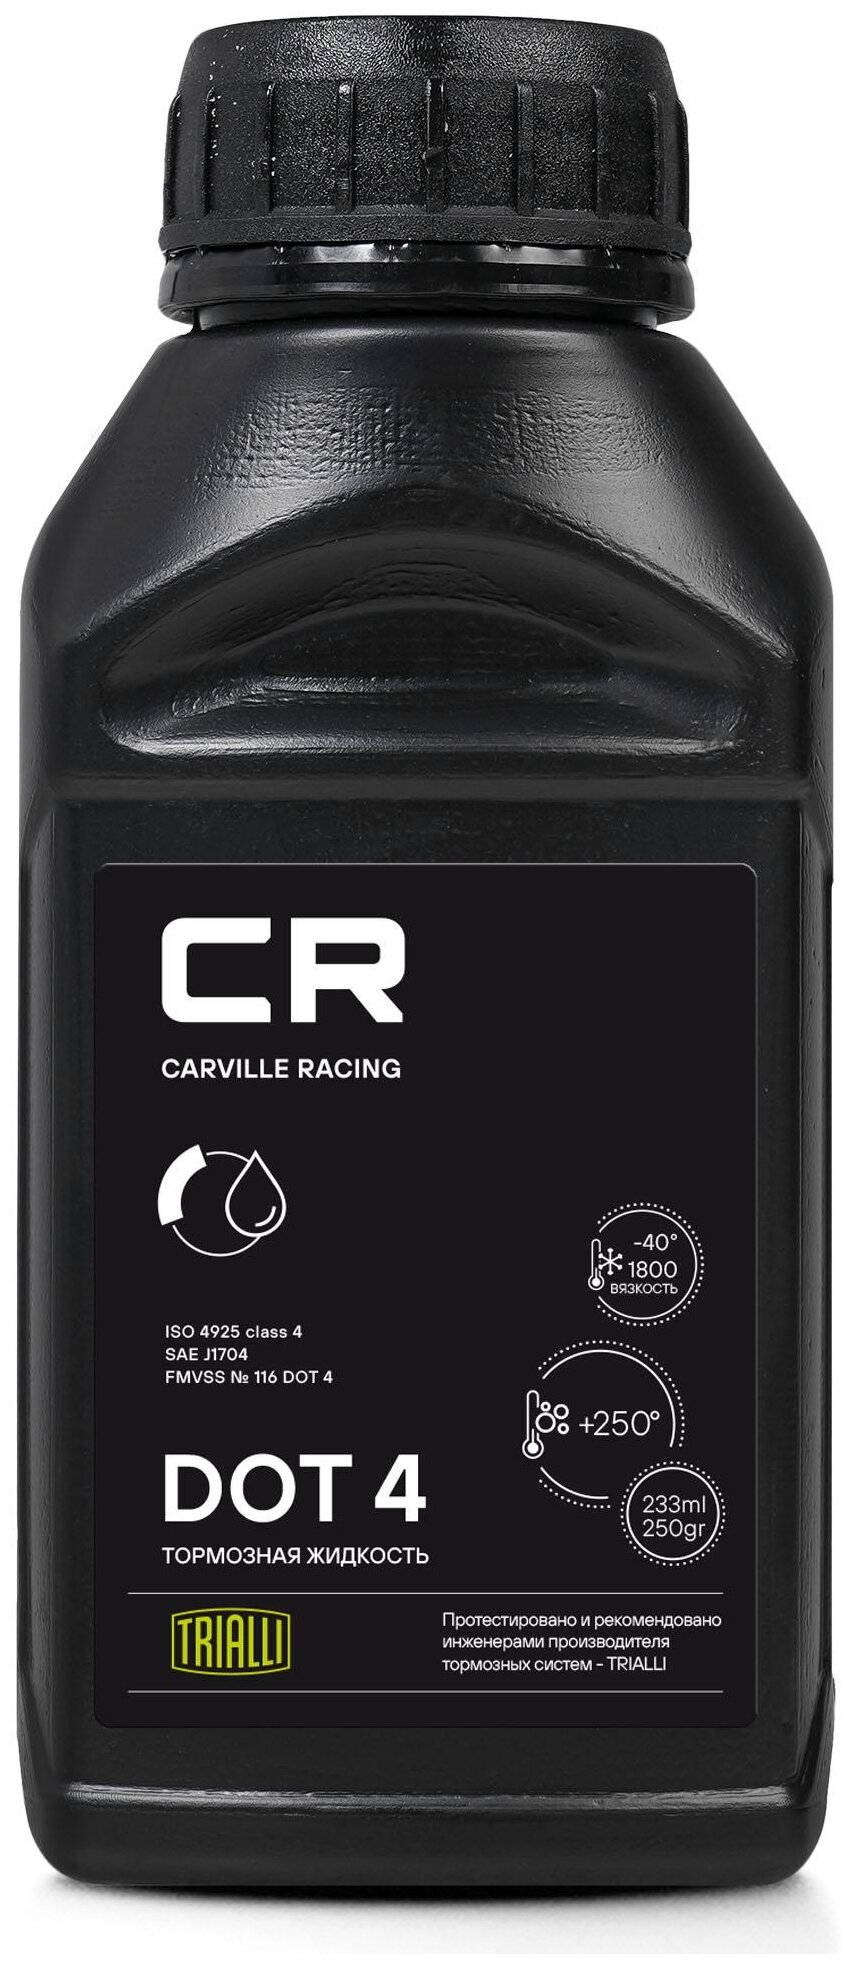 Тормозная жидкость DOT 4, 233мл/250гр Carville Racing - фото №1